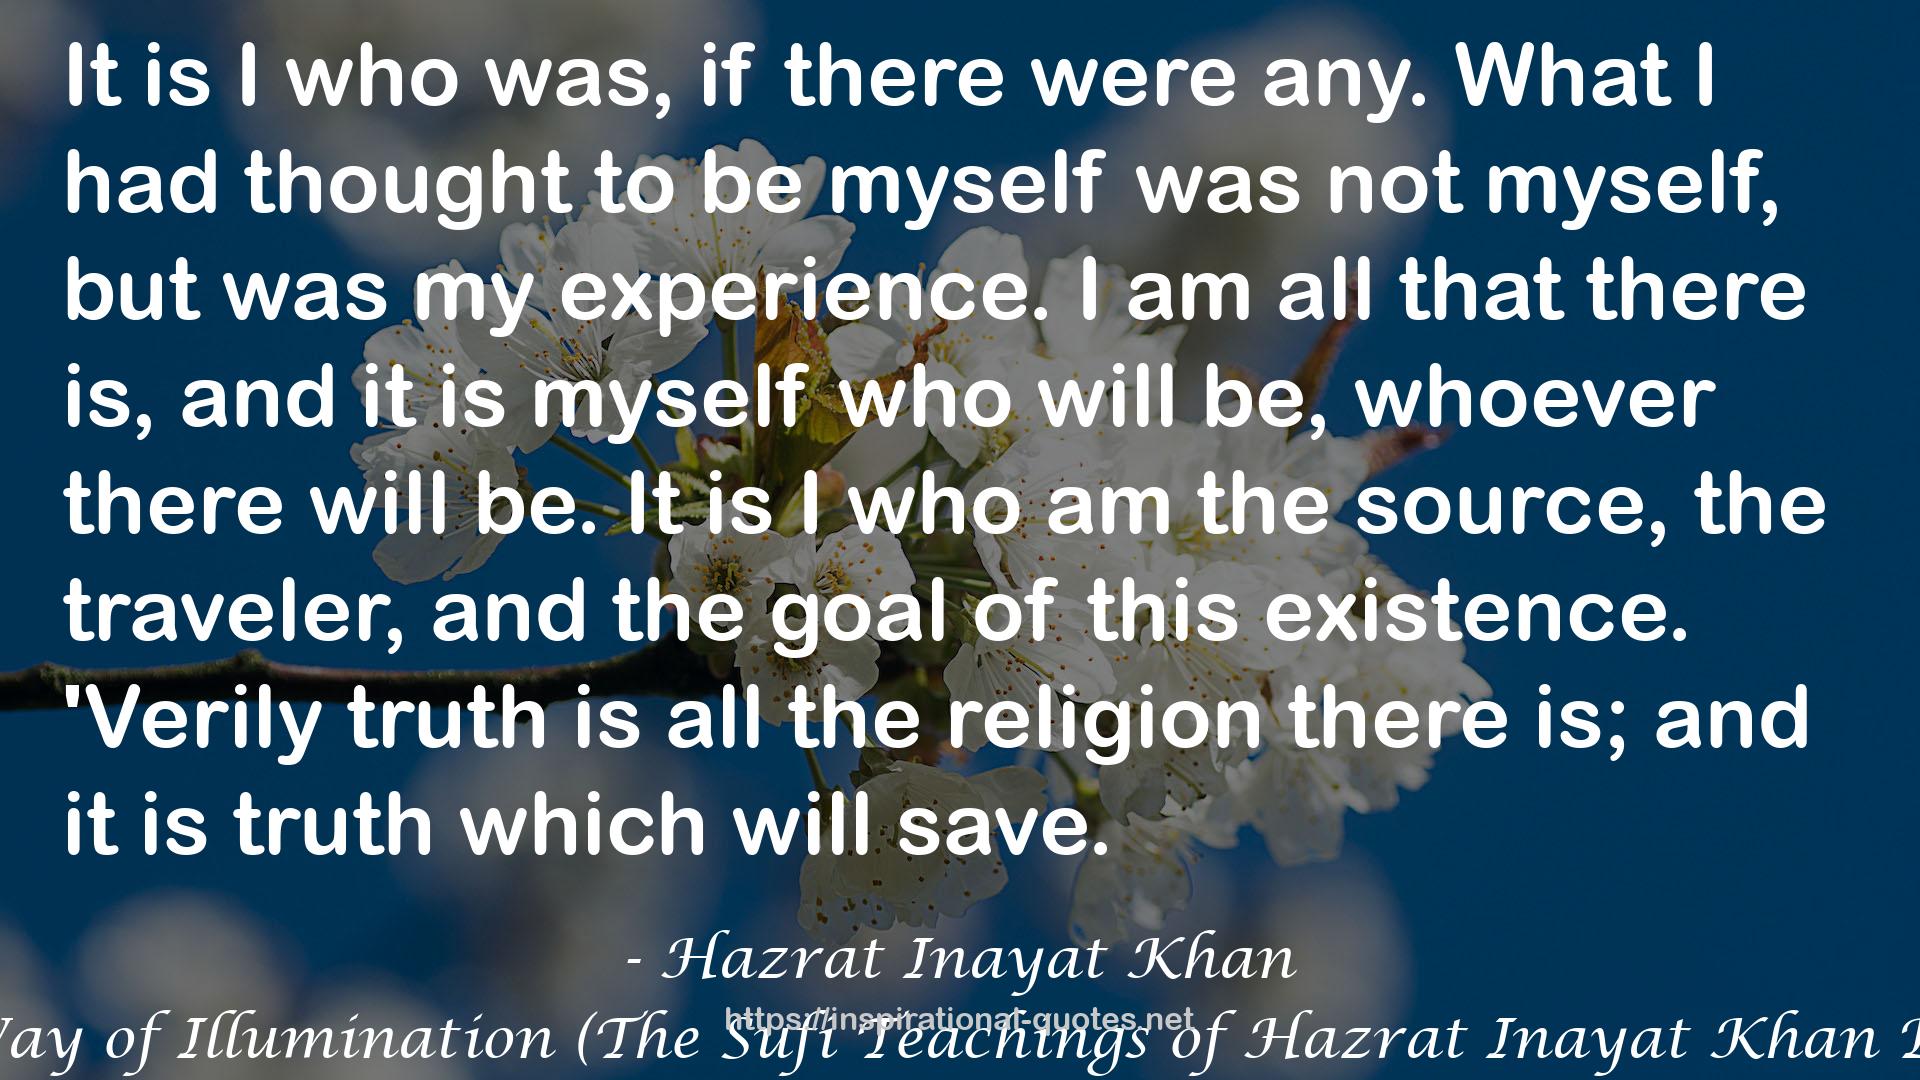 The Way of Illumination (The Sufi Teachings of Hazrat Inayat Khan Book 1) QUOTES